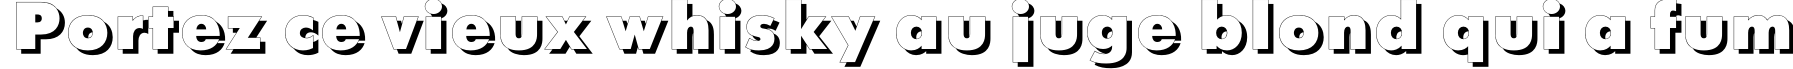 Пример написания шрифтом FuturisXShadowC текста на французском